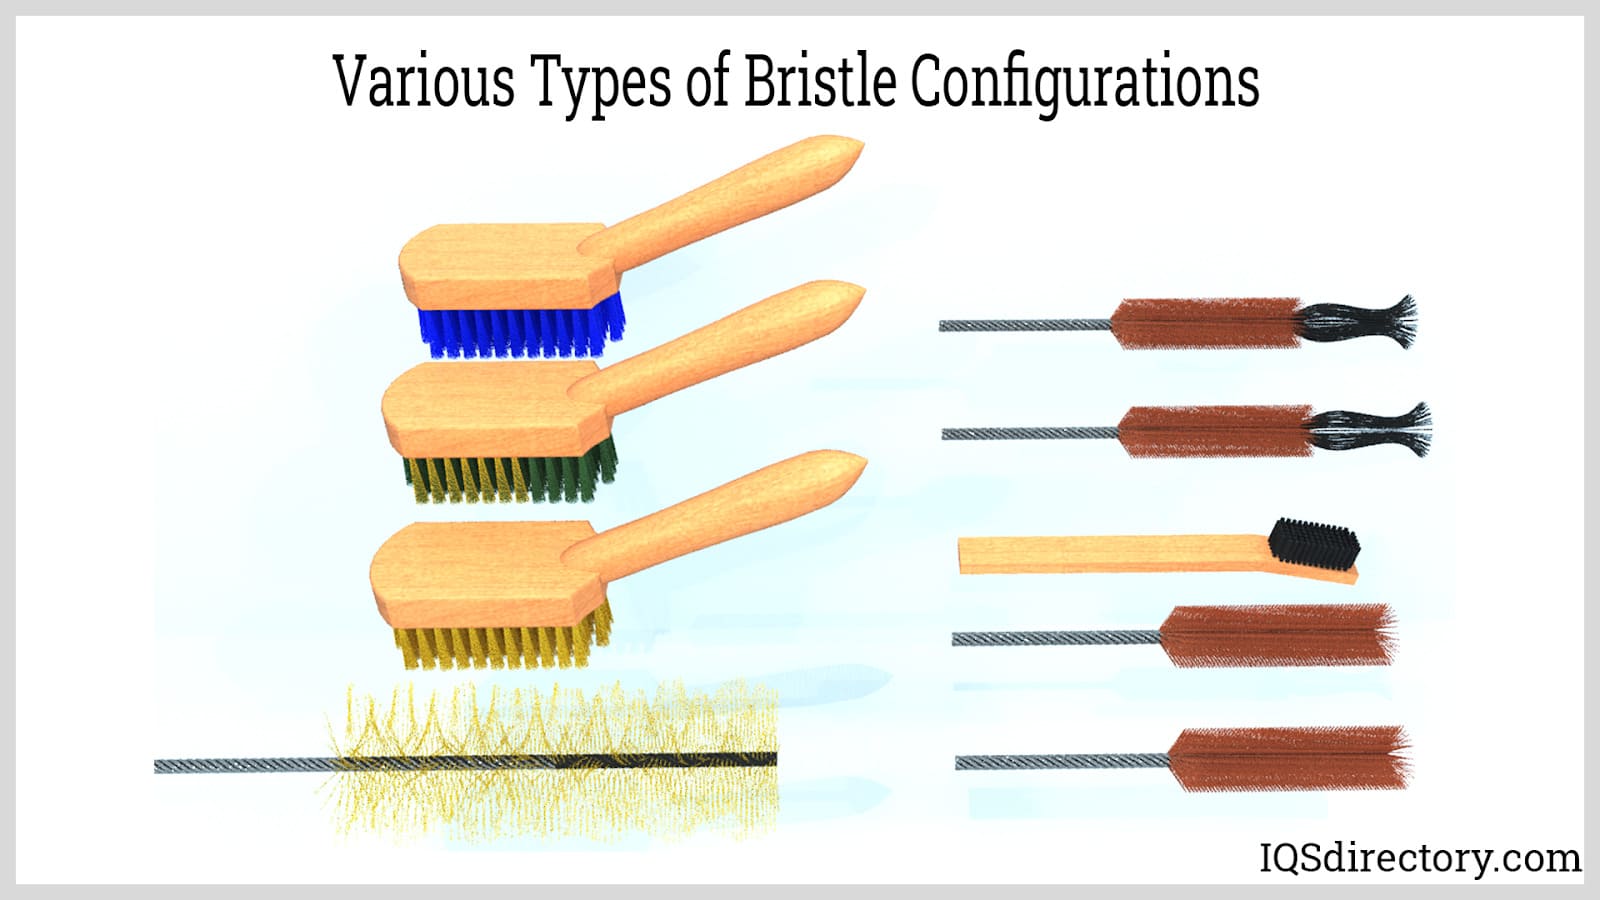 Bristle Configurations